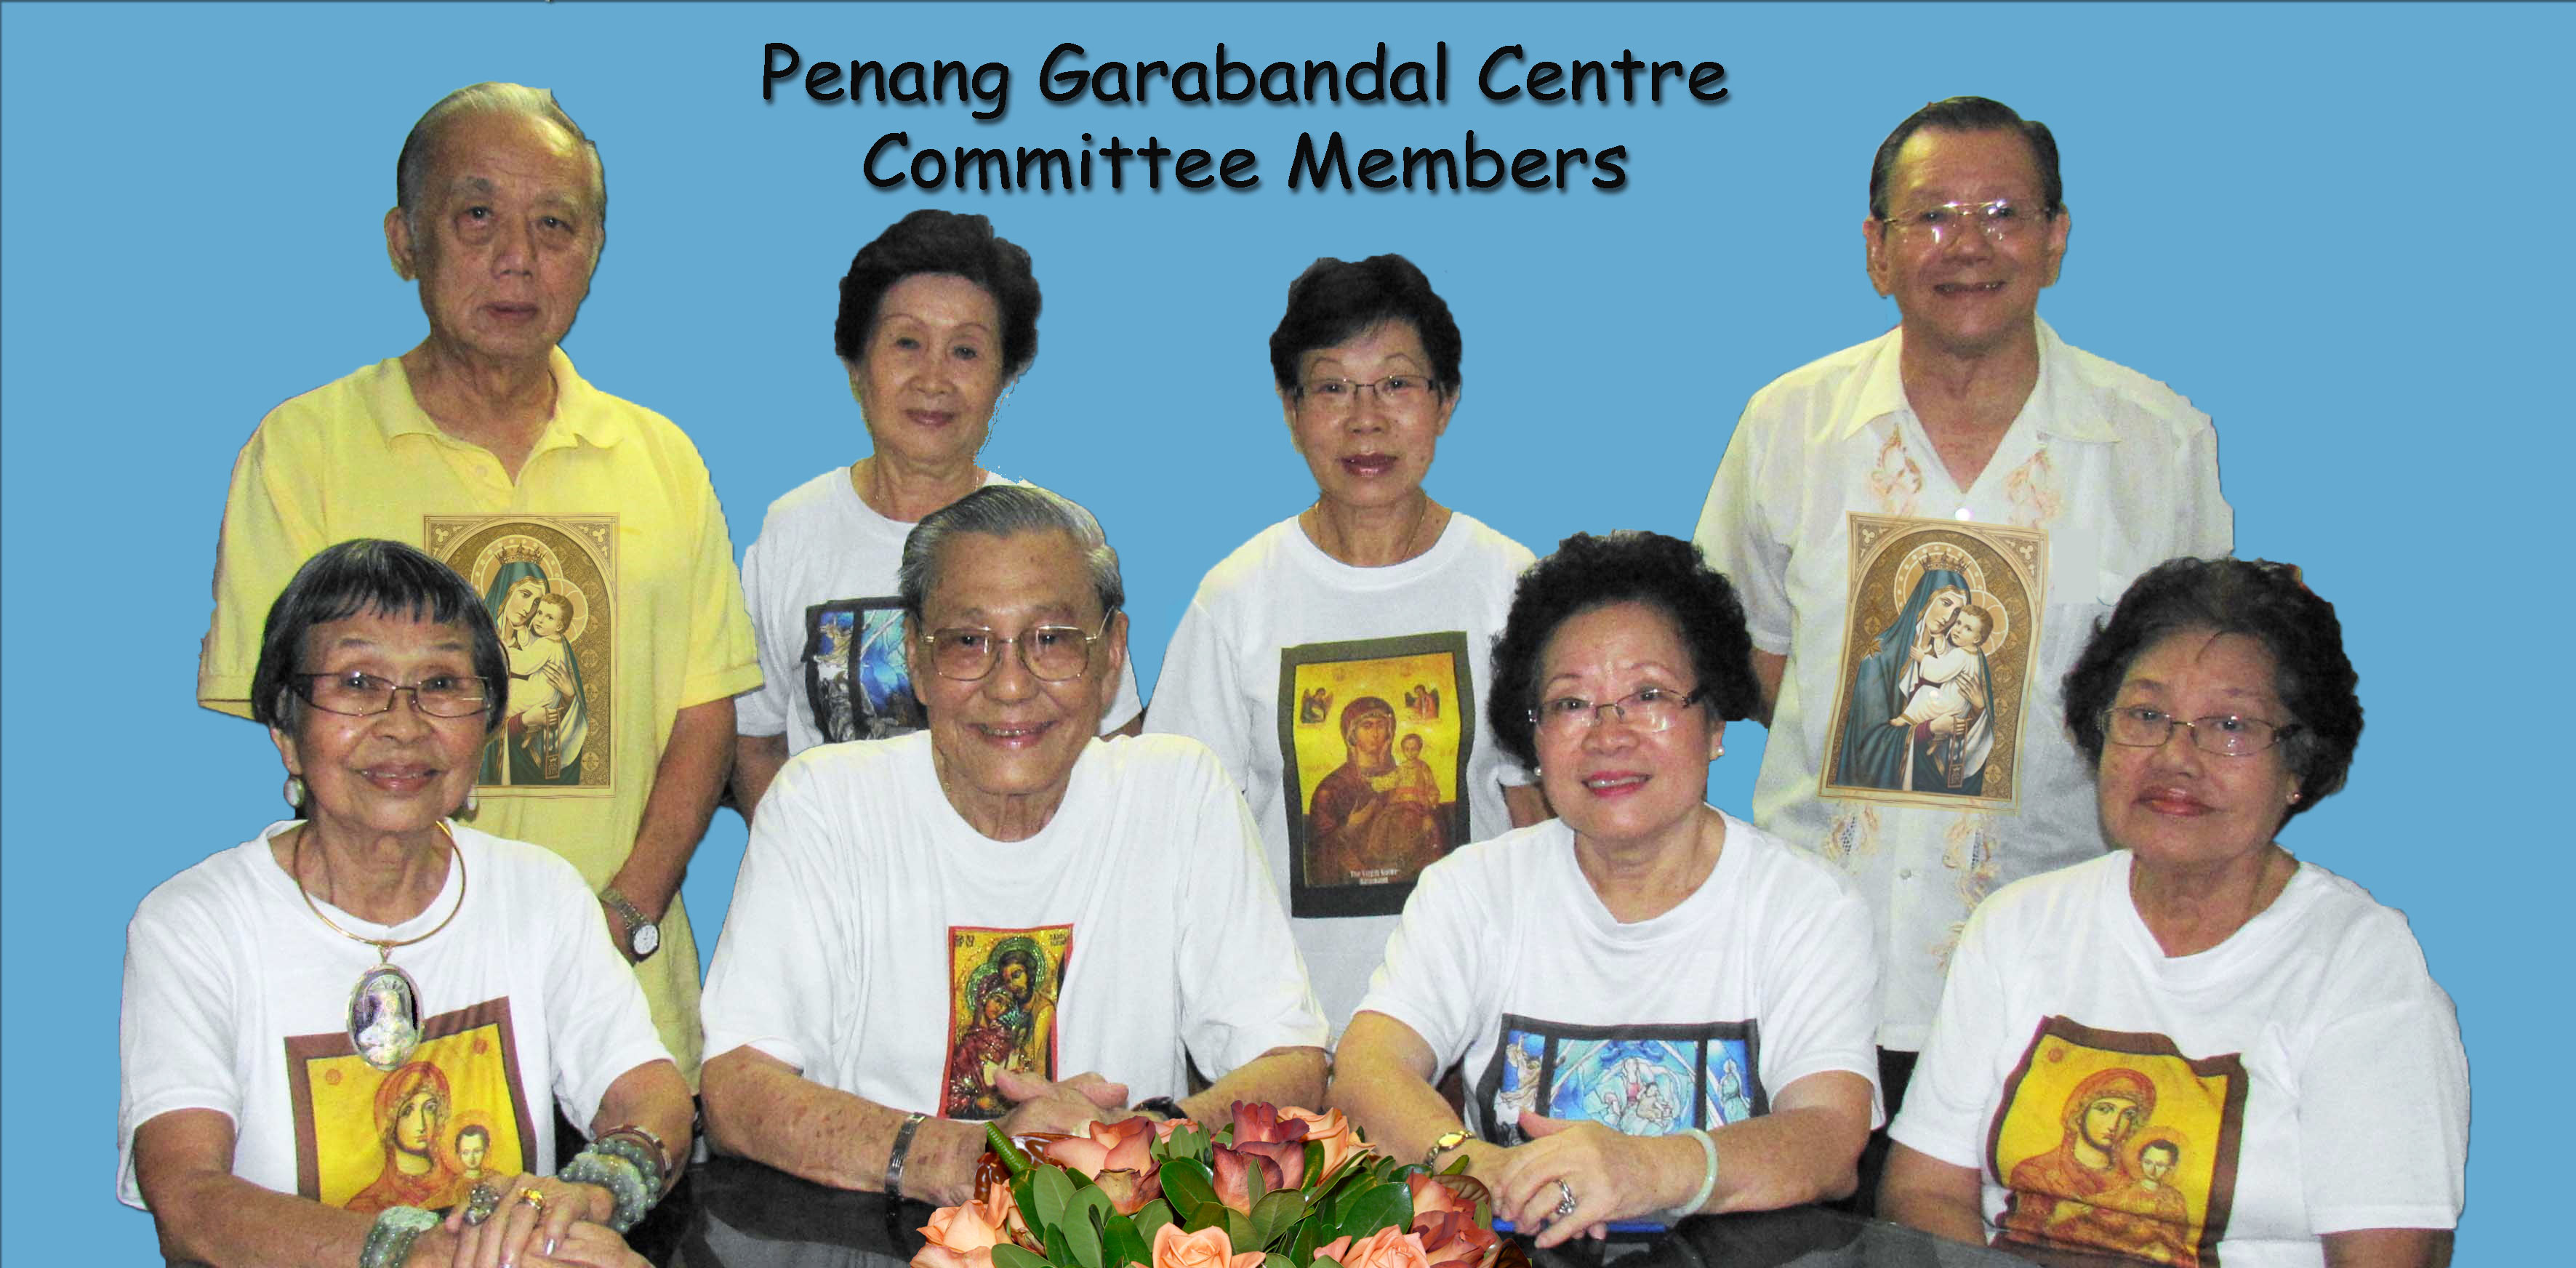 http://suzannetony.files.wordpress.com/2012/08/penang-garabandal-centre-committee-members-20111.jpg